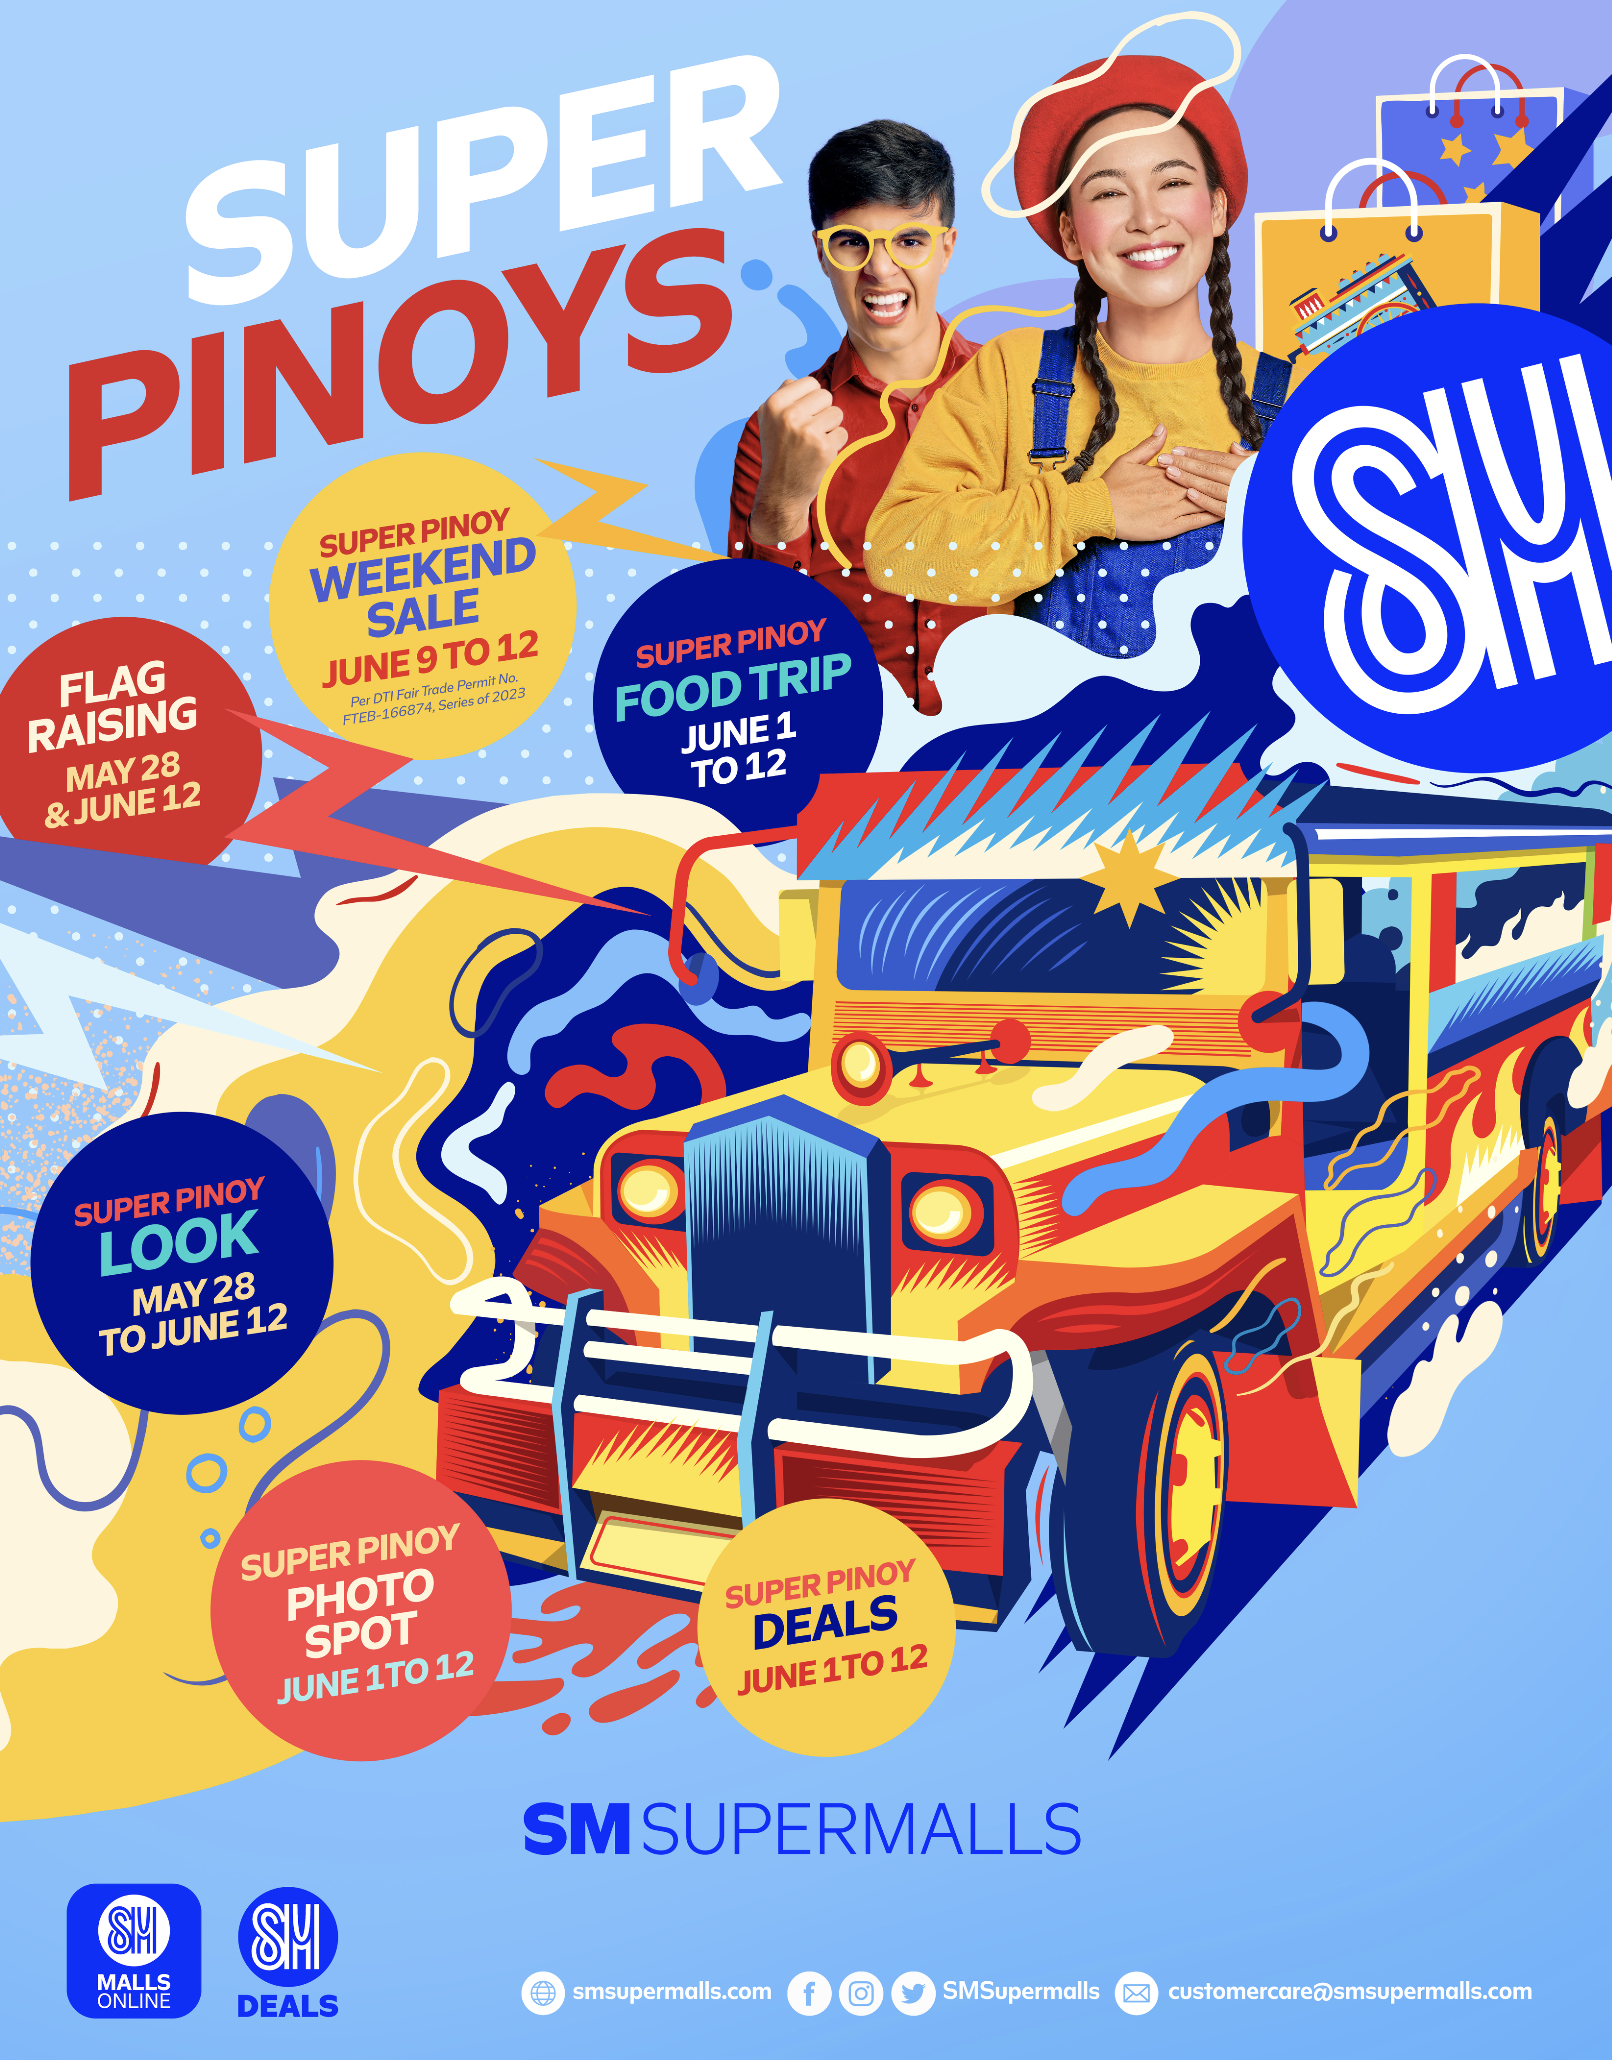 SM Supermalls Honors Super Pinoys this June